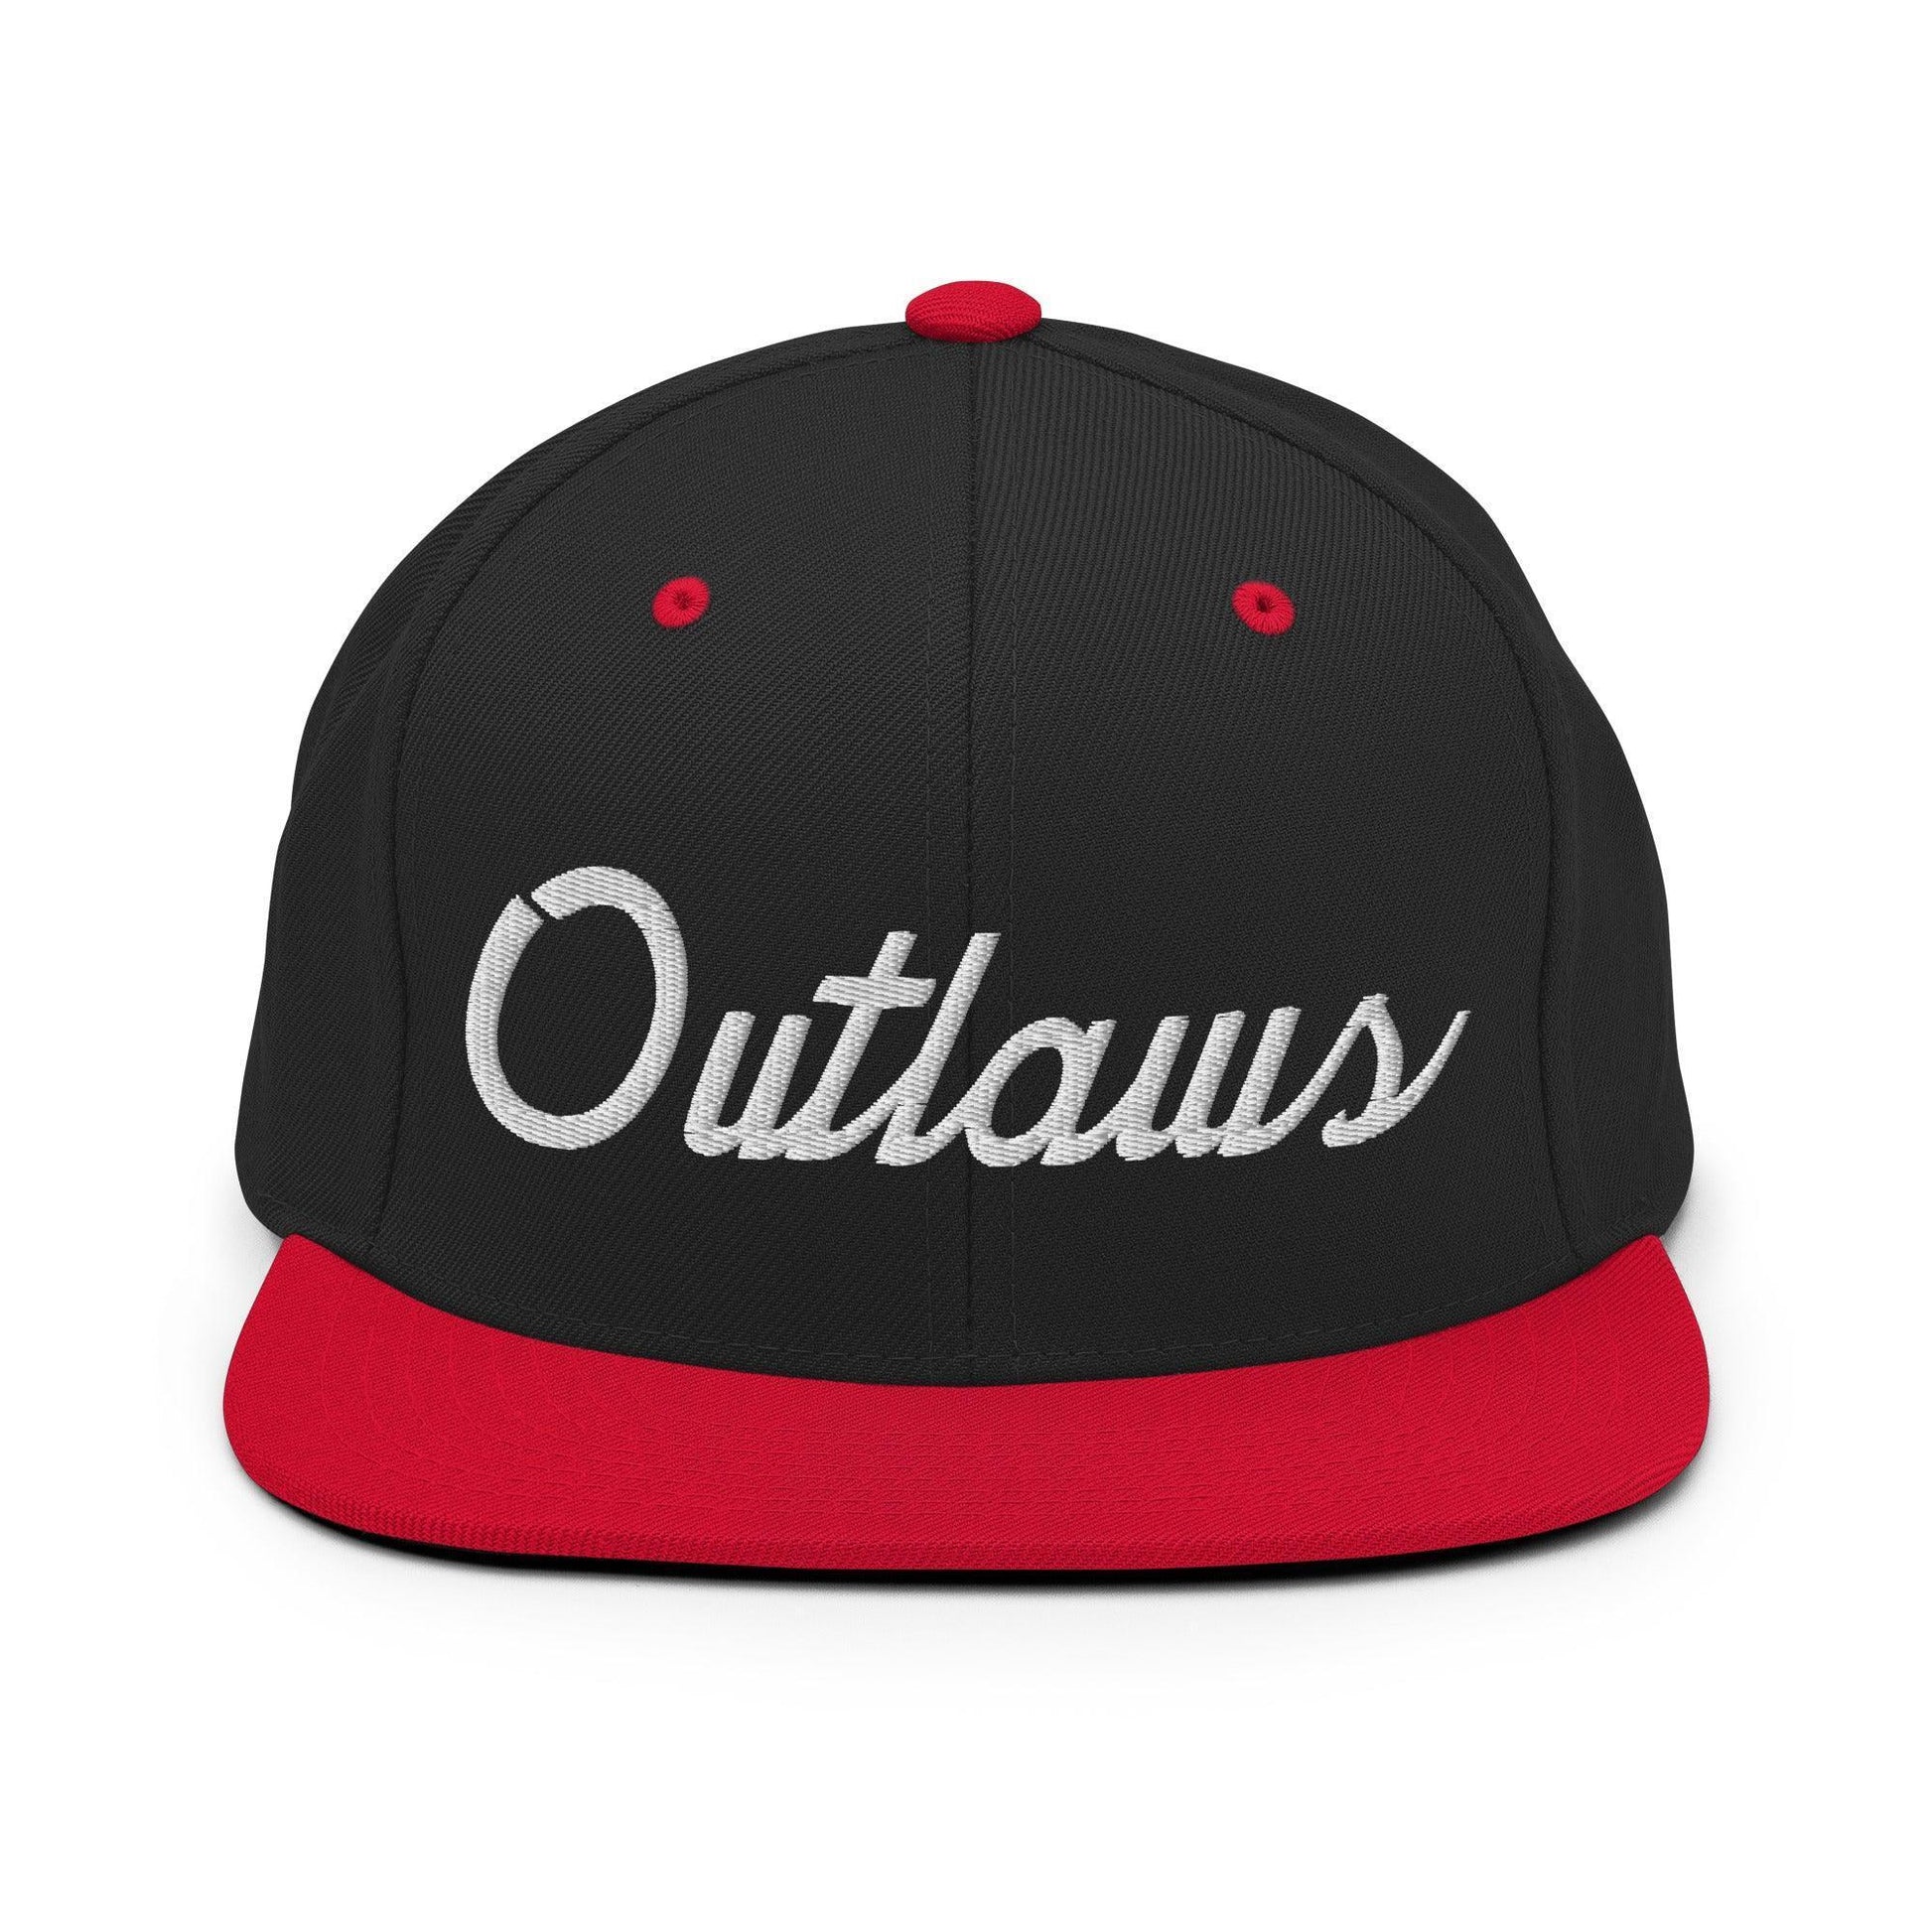 Outlaws School Mascot Script Snapback Hat Black Red